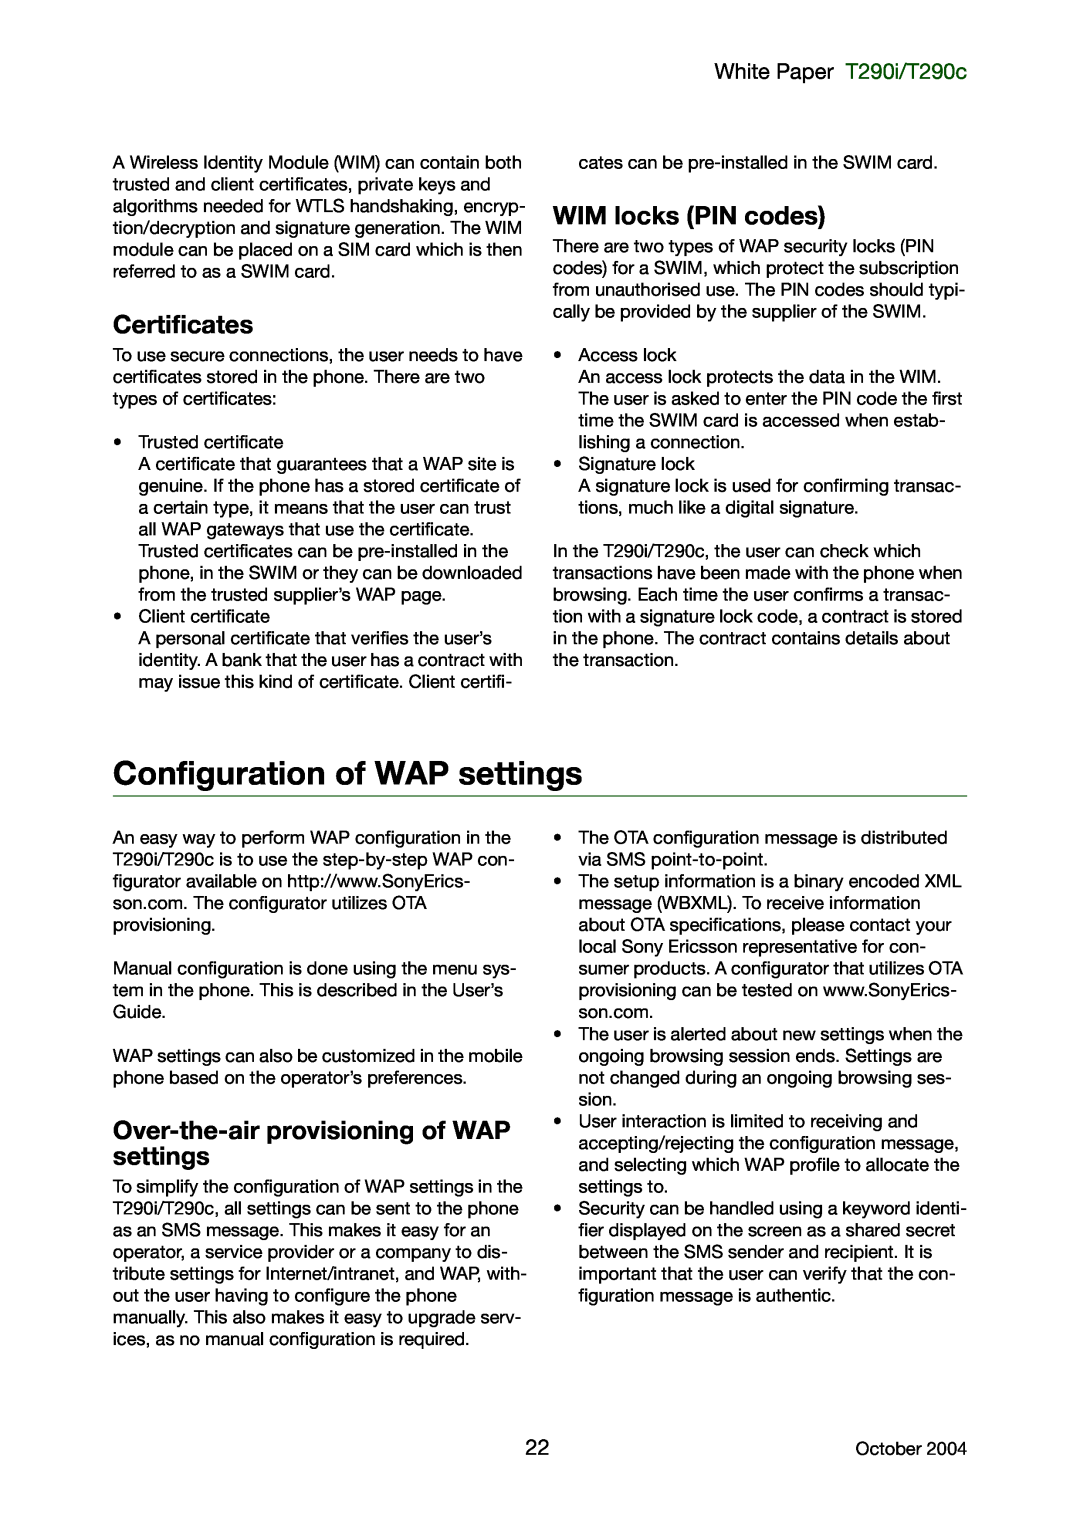 Sony Ericsson manual Configuration of WAP settings, Certificates, WIM locks PIN codes, White Paper T290i/T290c 